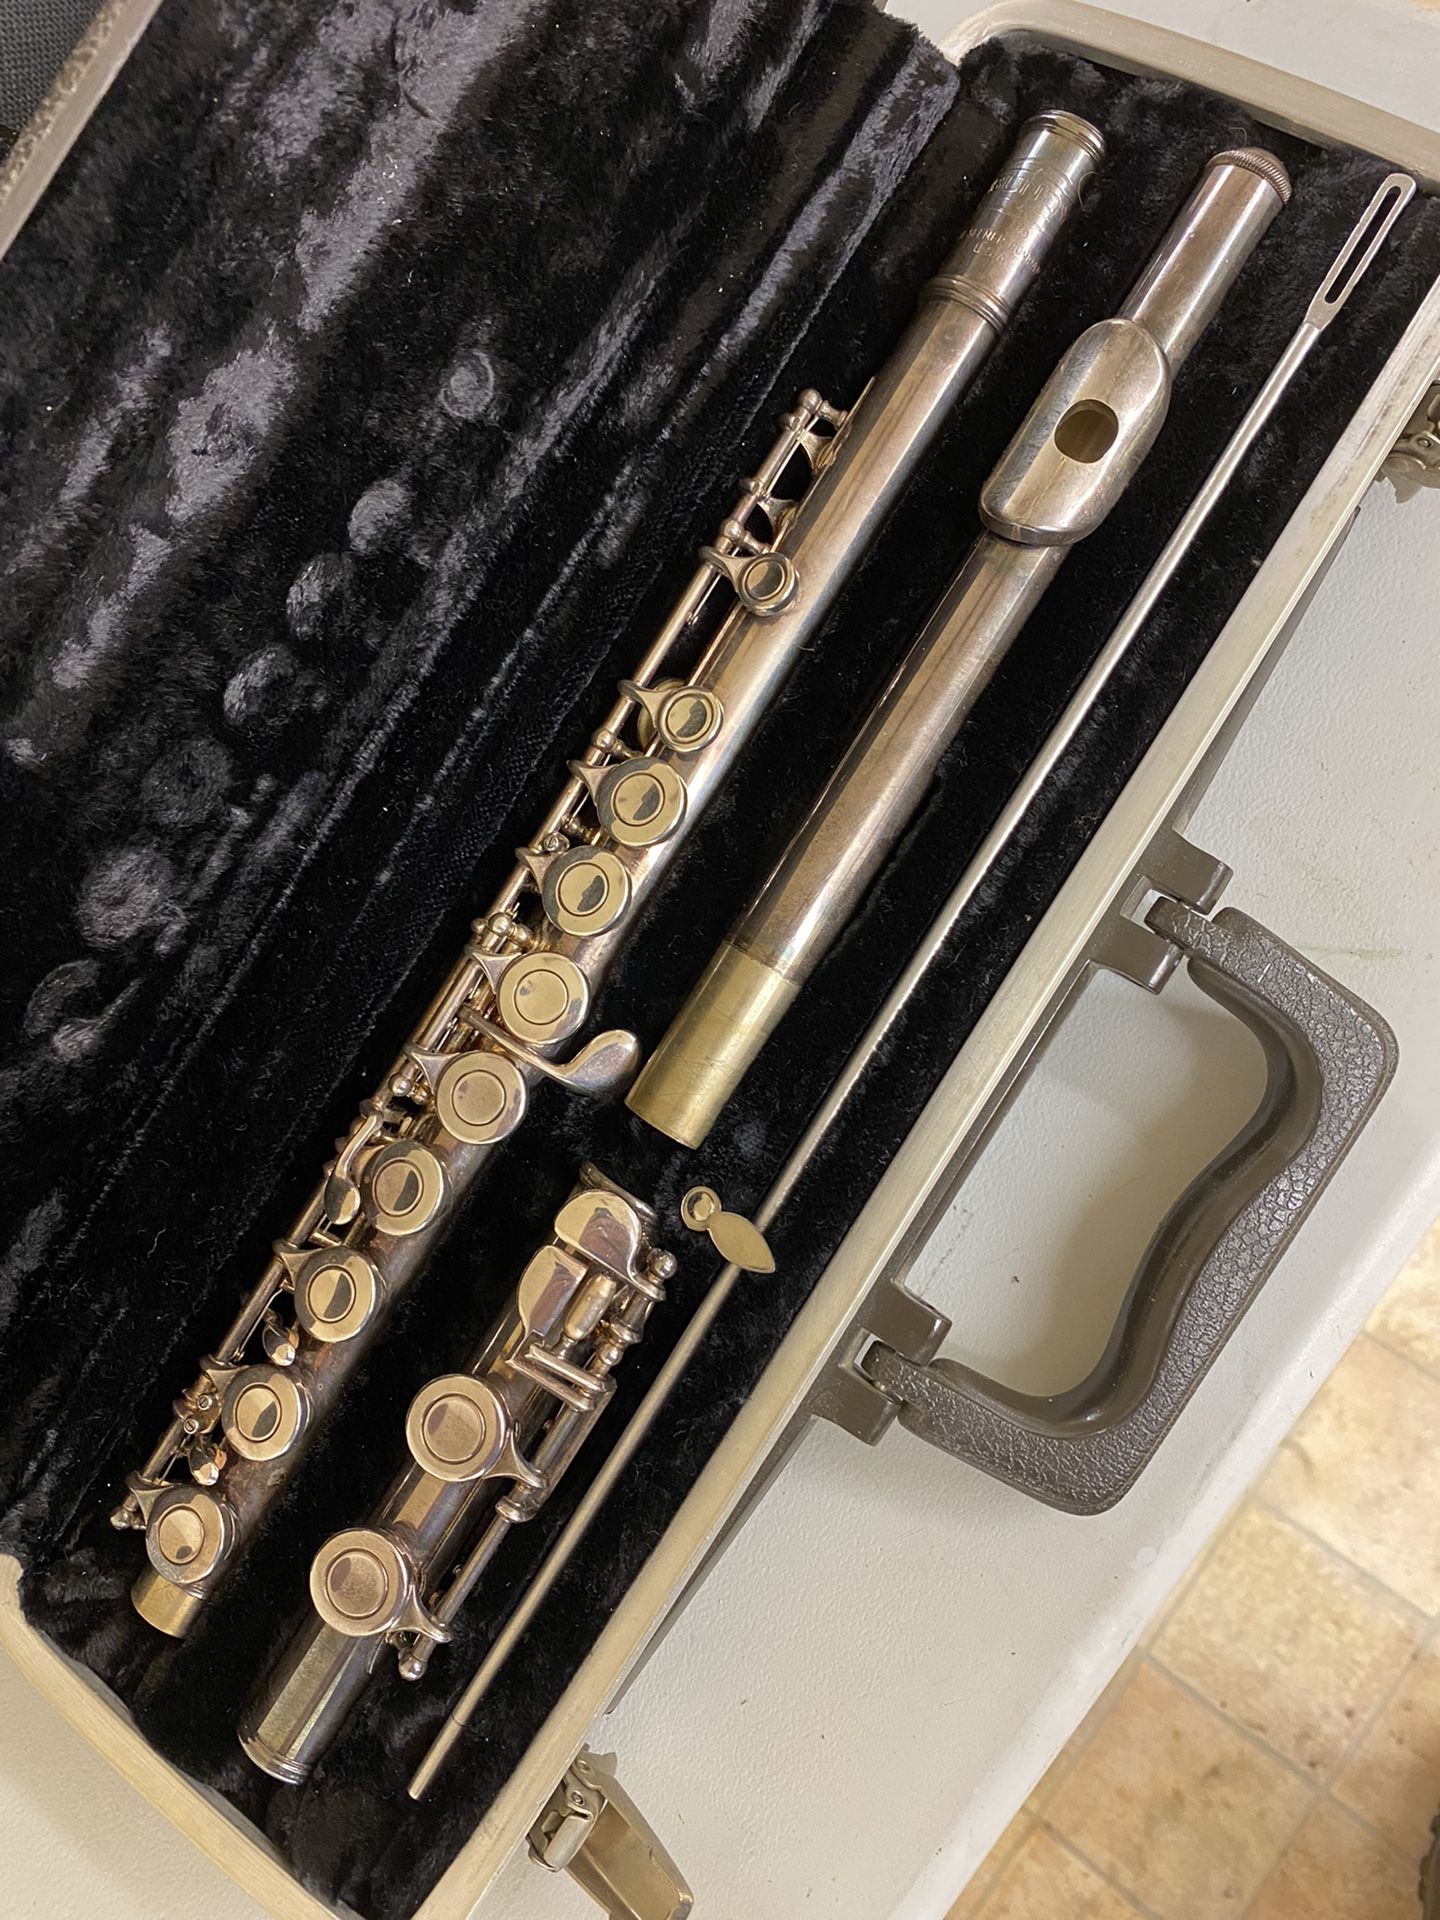 Marching Band Selmer Bundy Flute $120 Firm